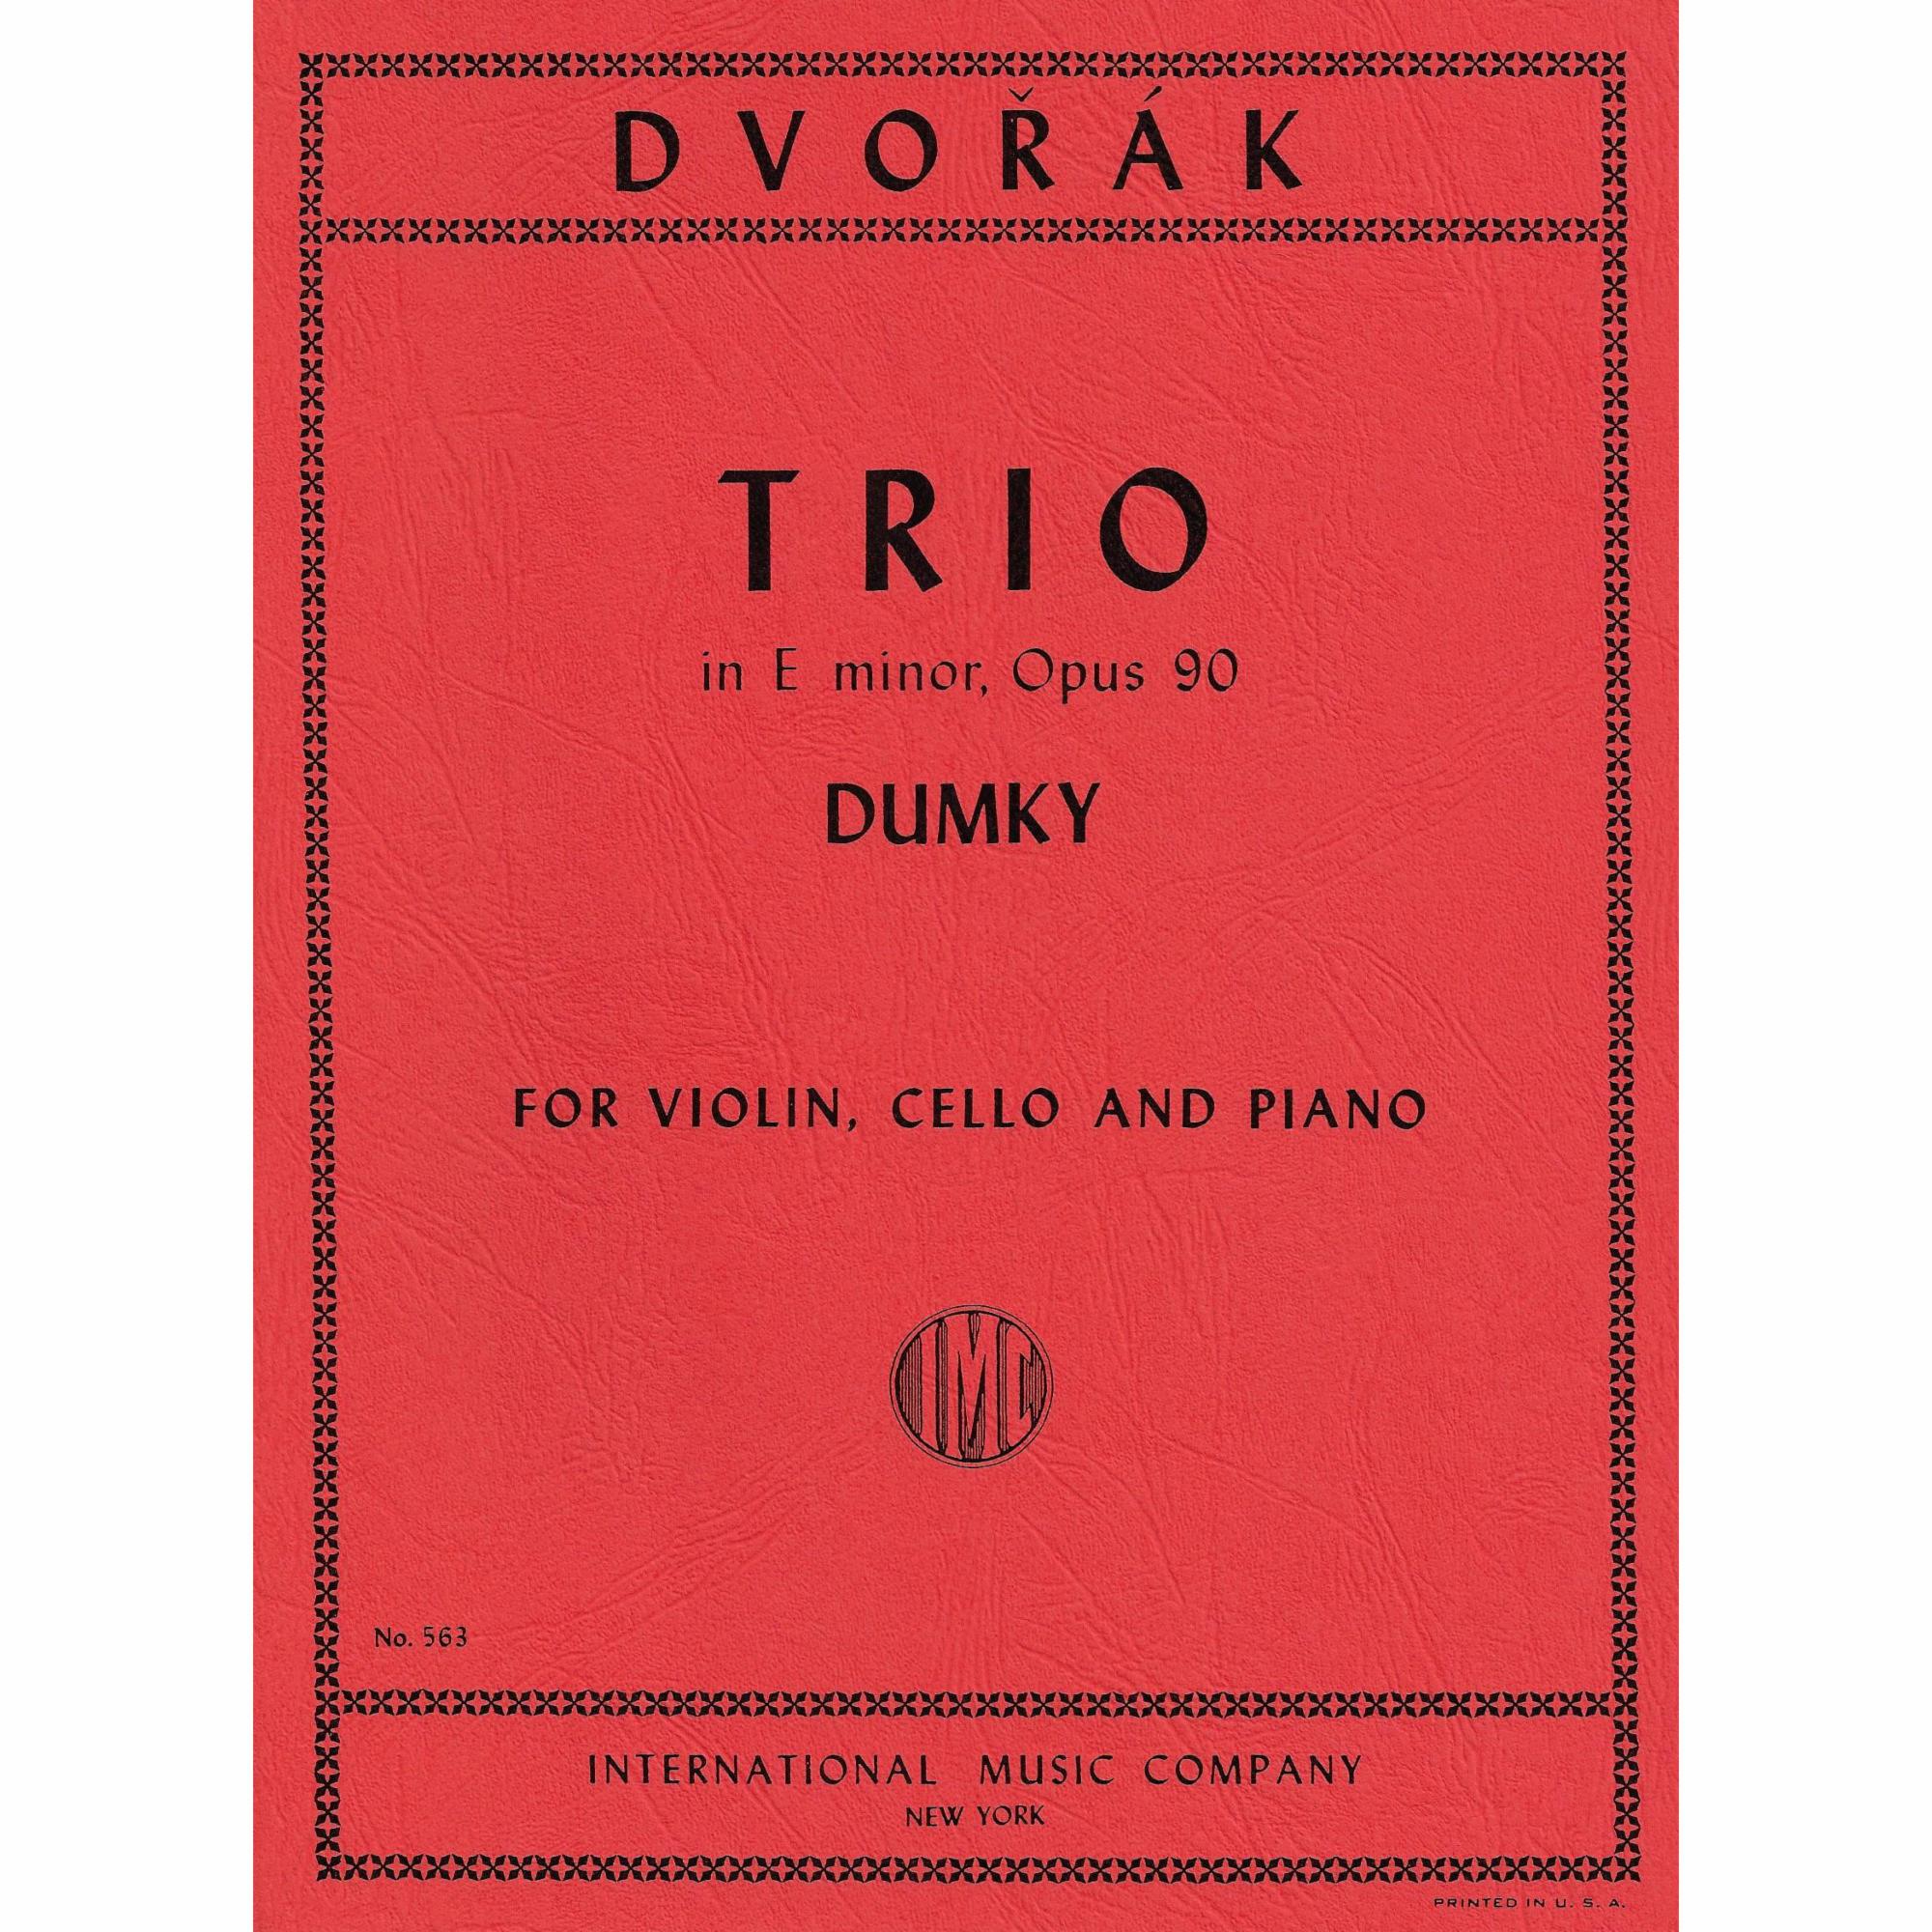 Dvorak -- Piano Trio in E Minor, Op. 90 (Dumky)